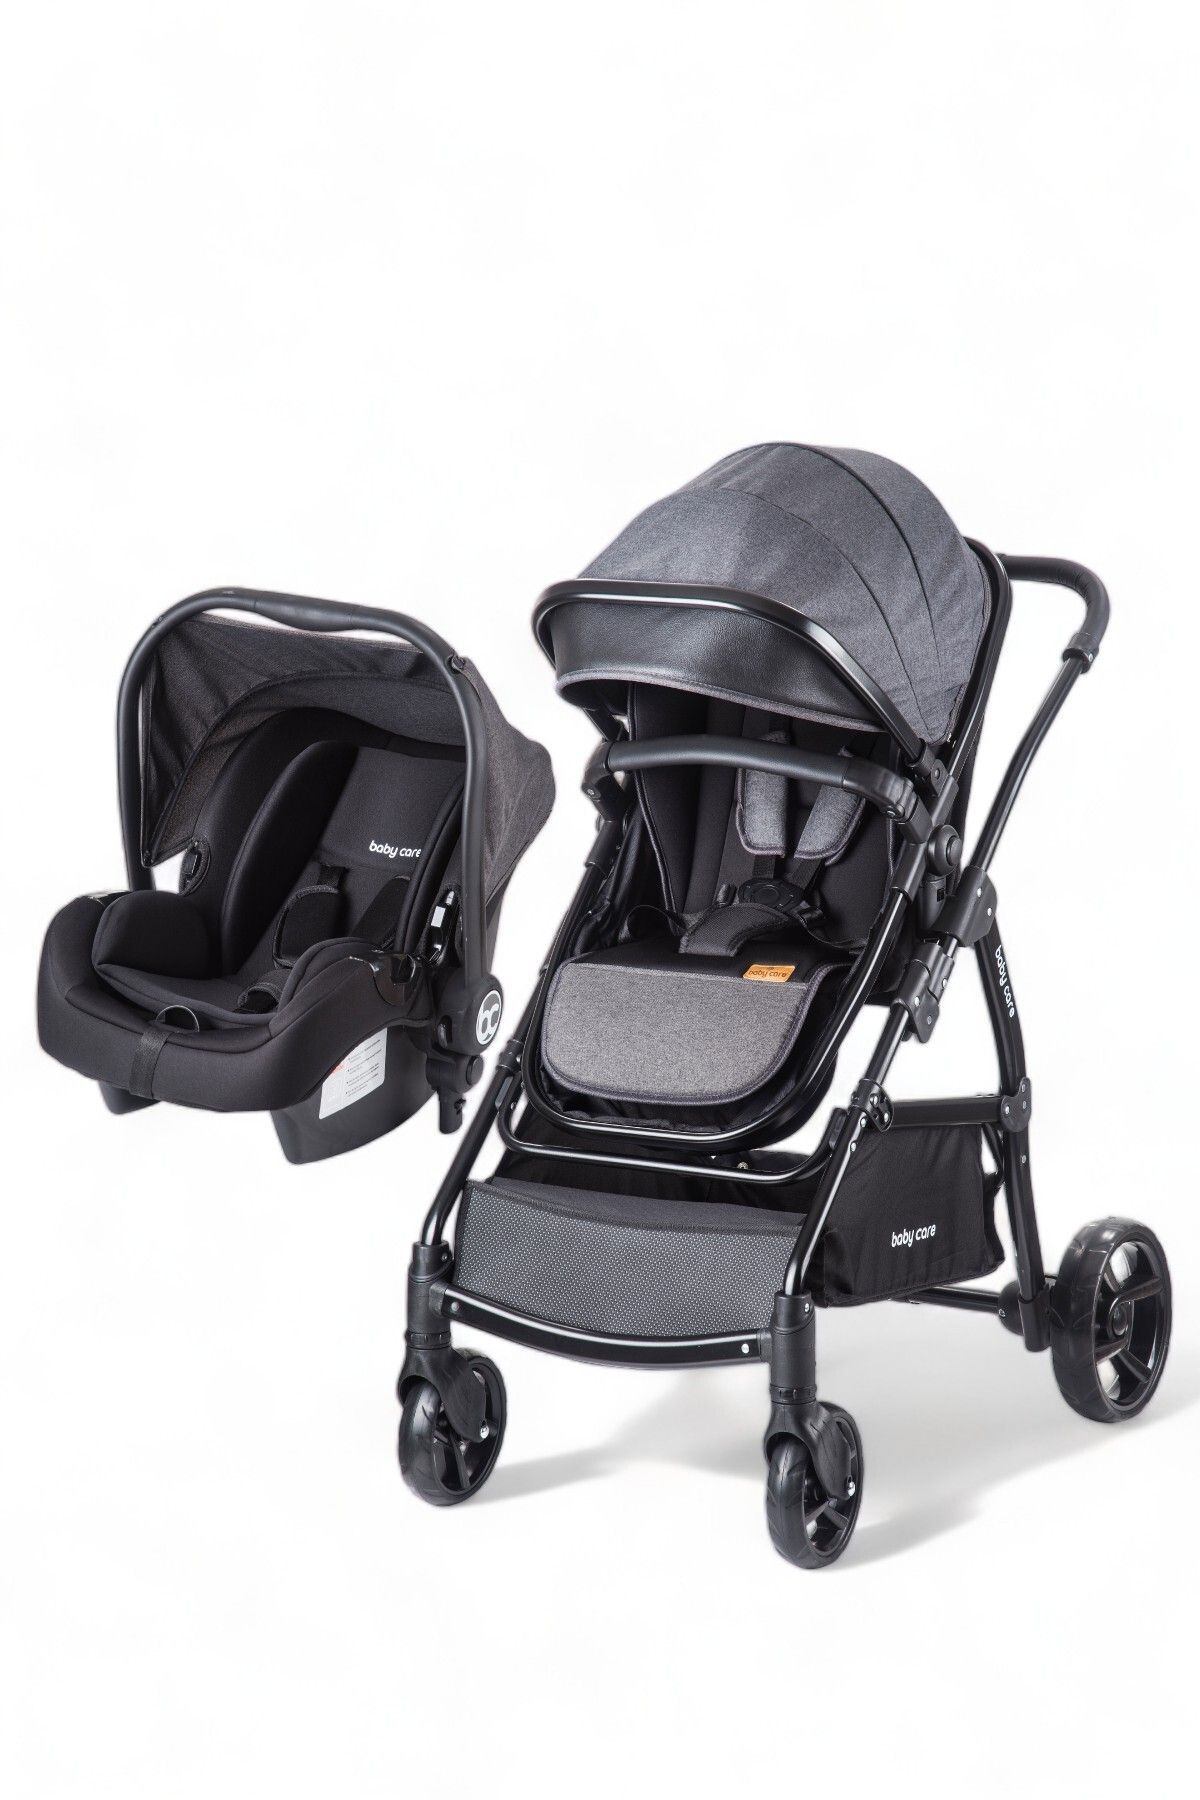 Baby Care Bc 315 - Safari Pro Travel Sistem Bebek Arabası ( Siyah )